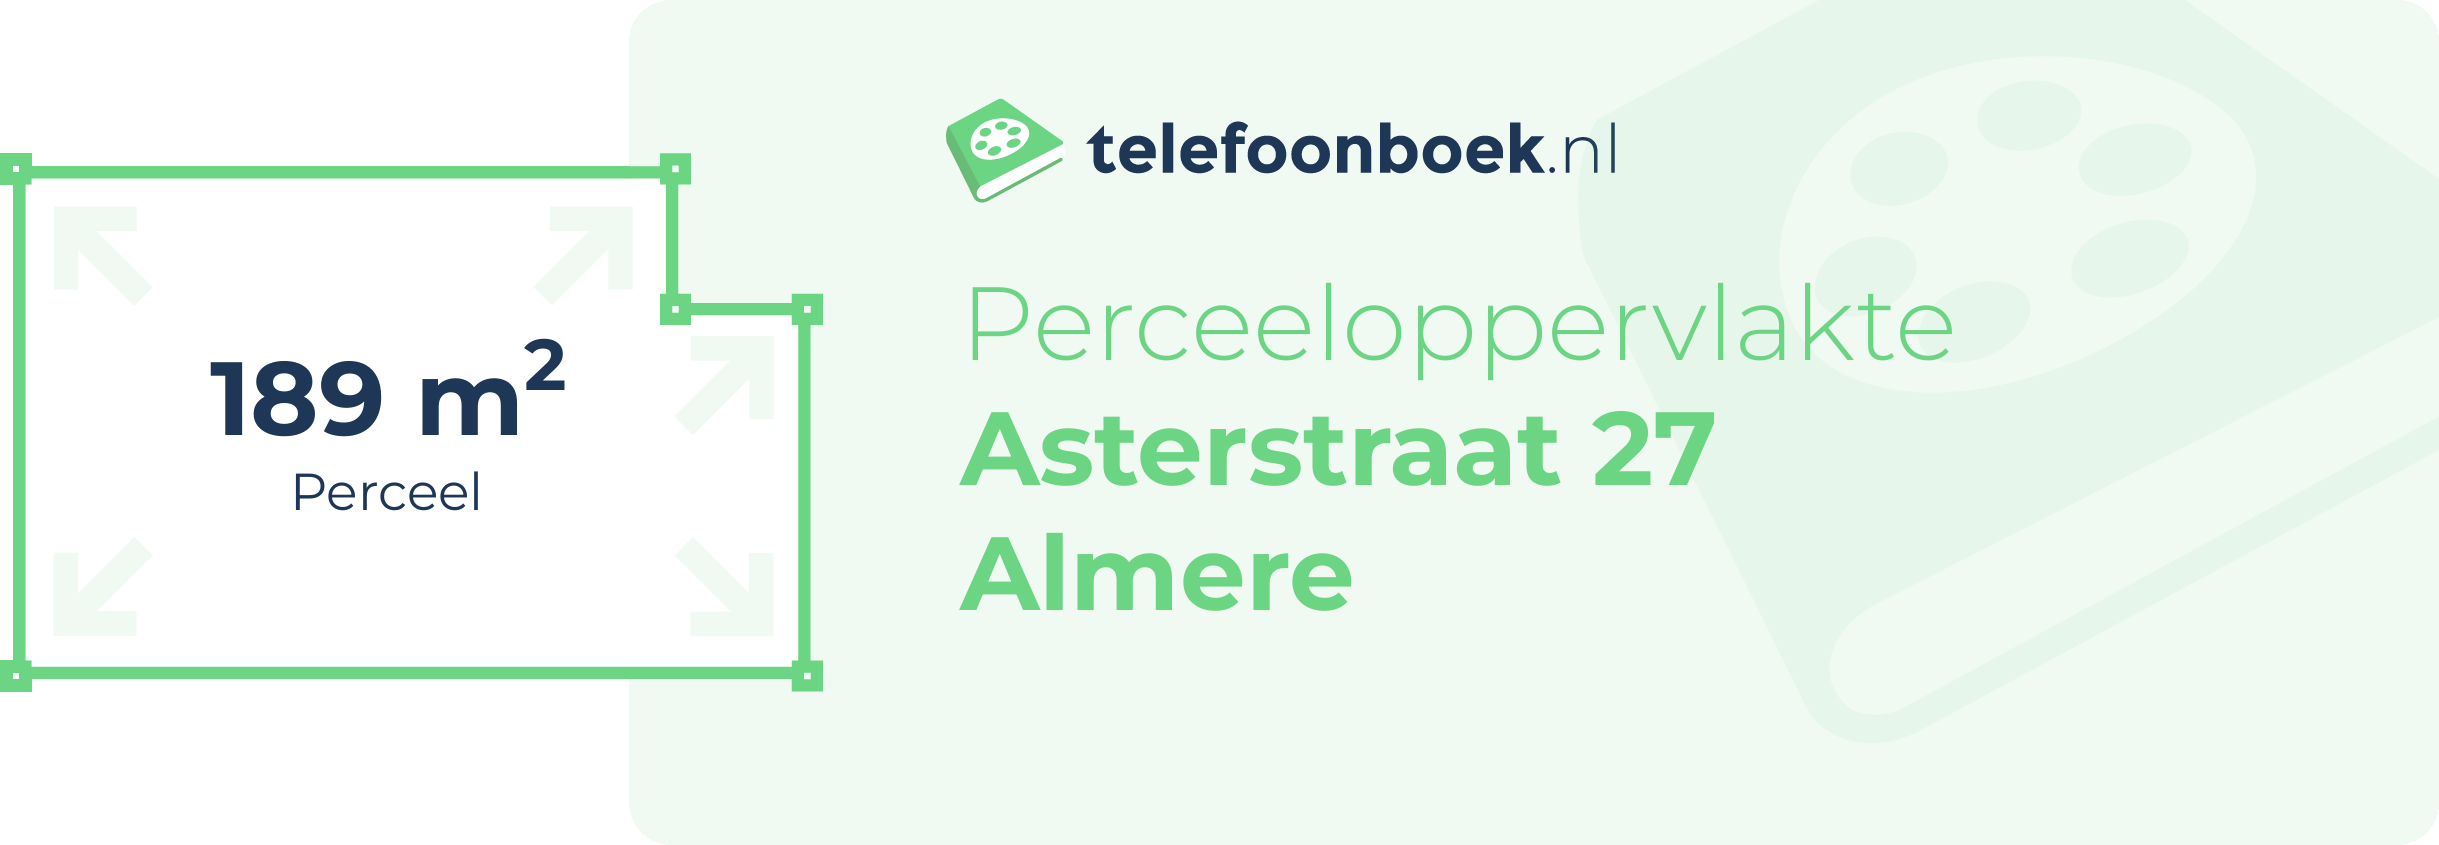 Perceeloppervlakte Asterstraat 27 Almere